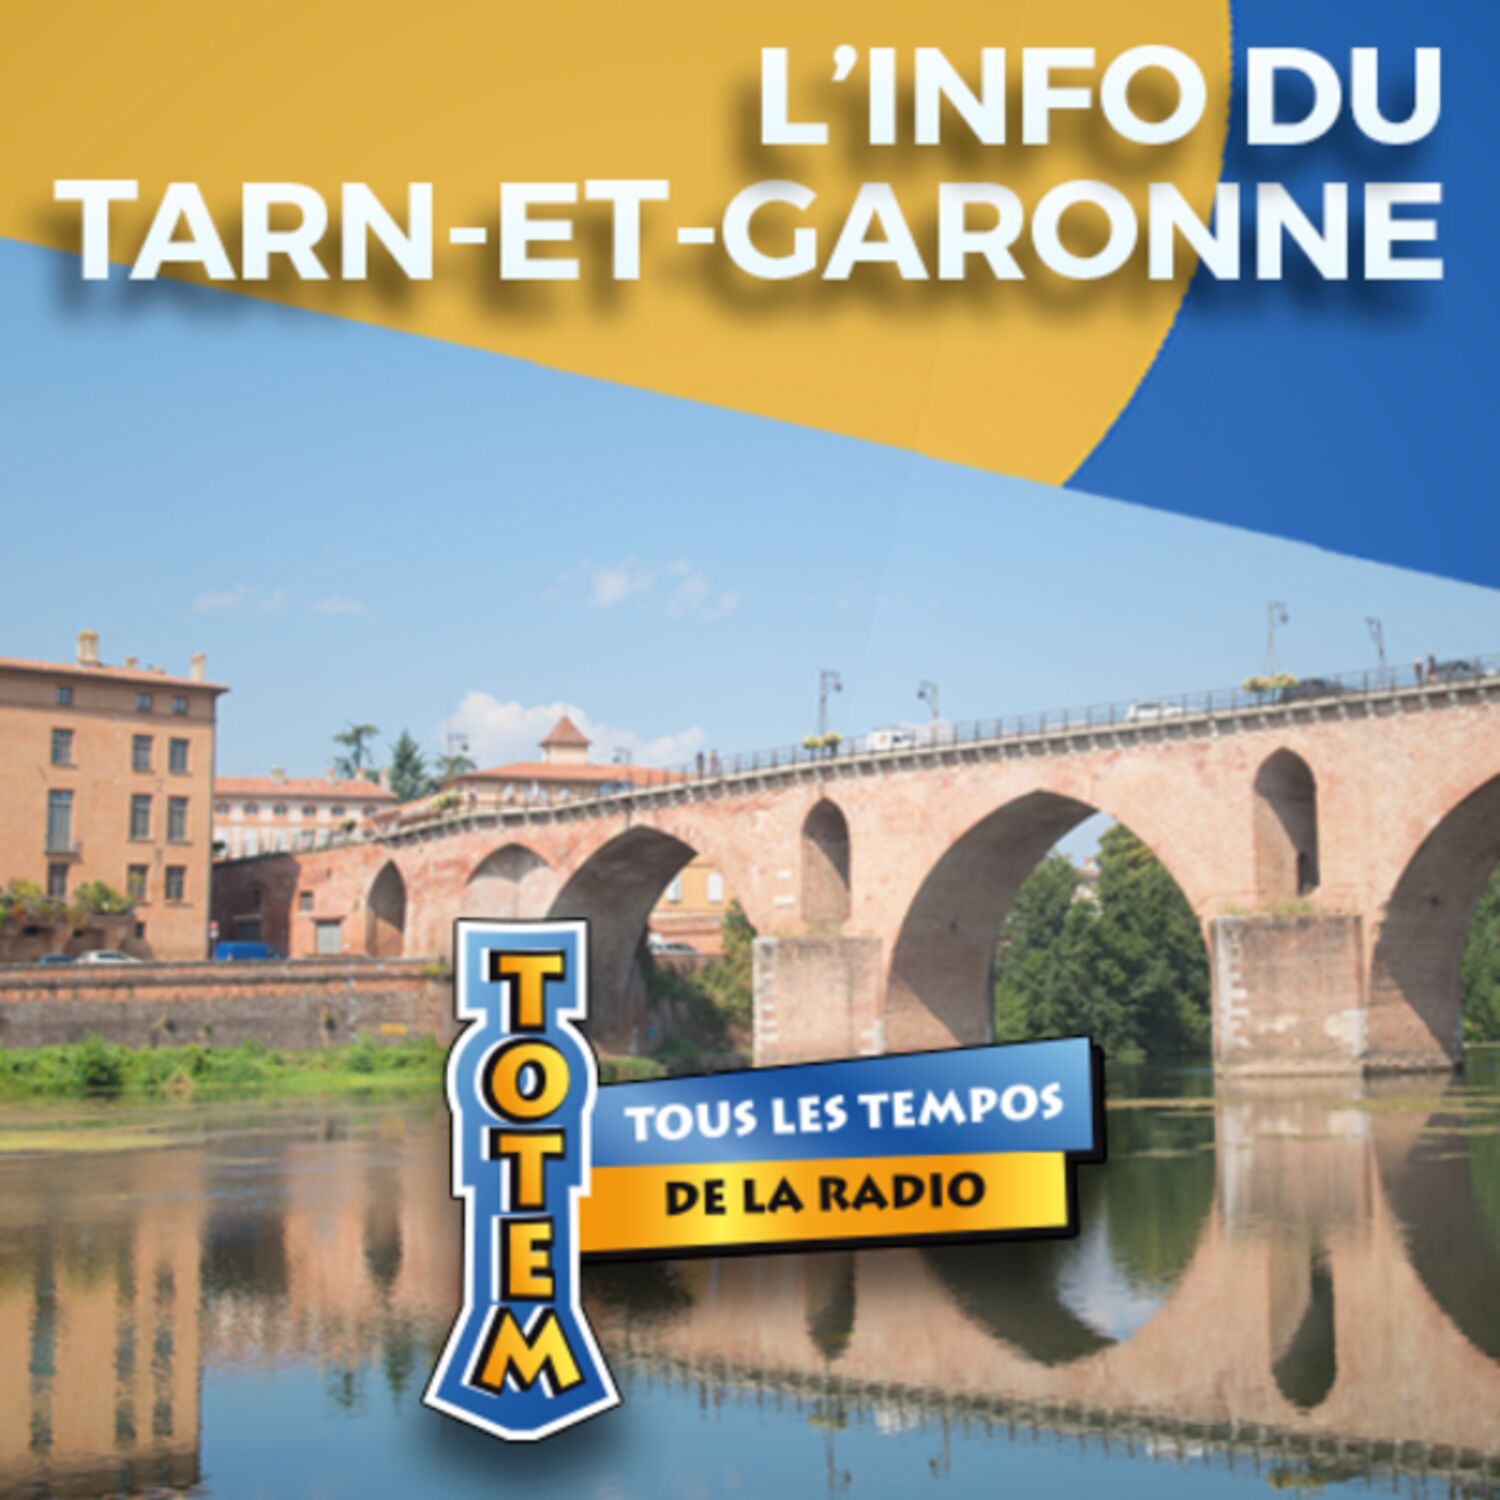 L'info du Tarn-et-Garonne du 08/05/23 à 12h28